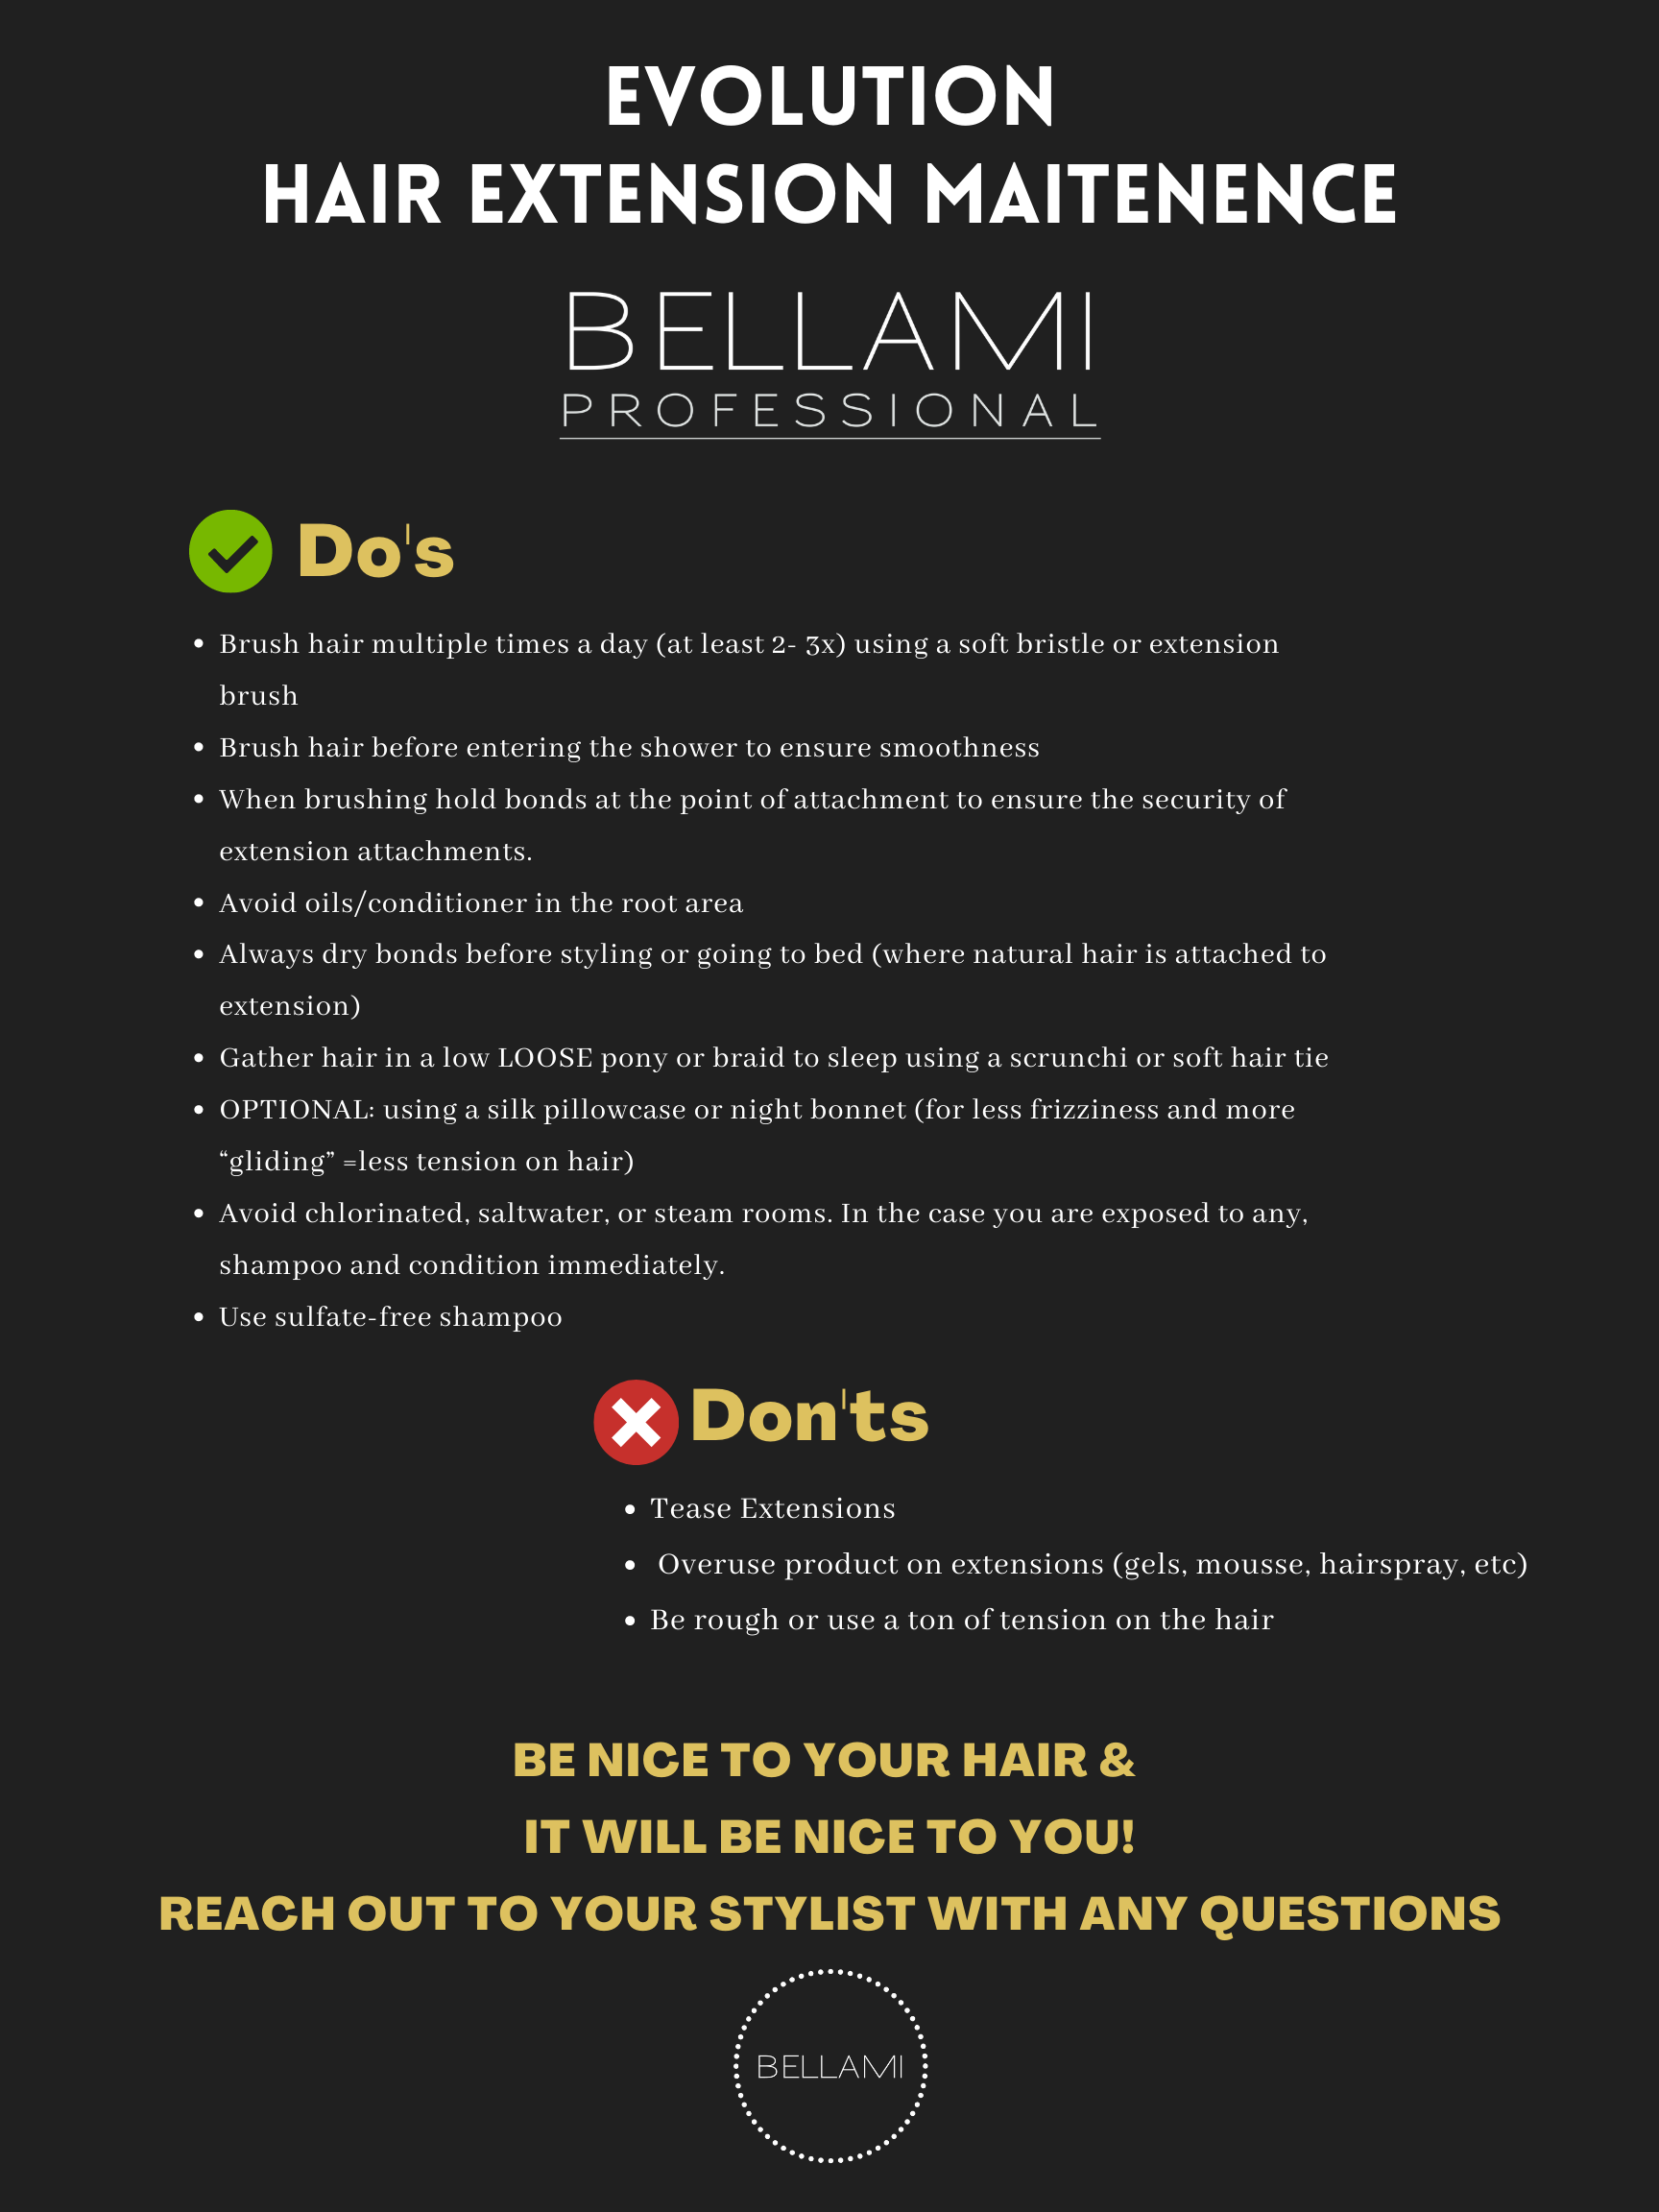 Bellami Hair Extensions — evolution